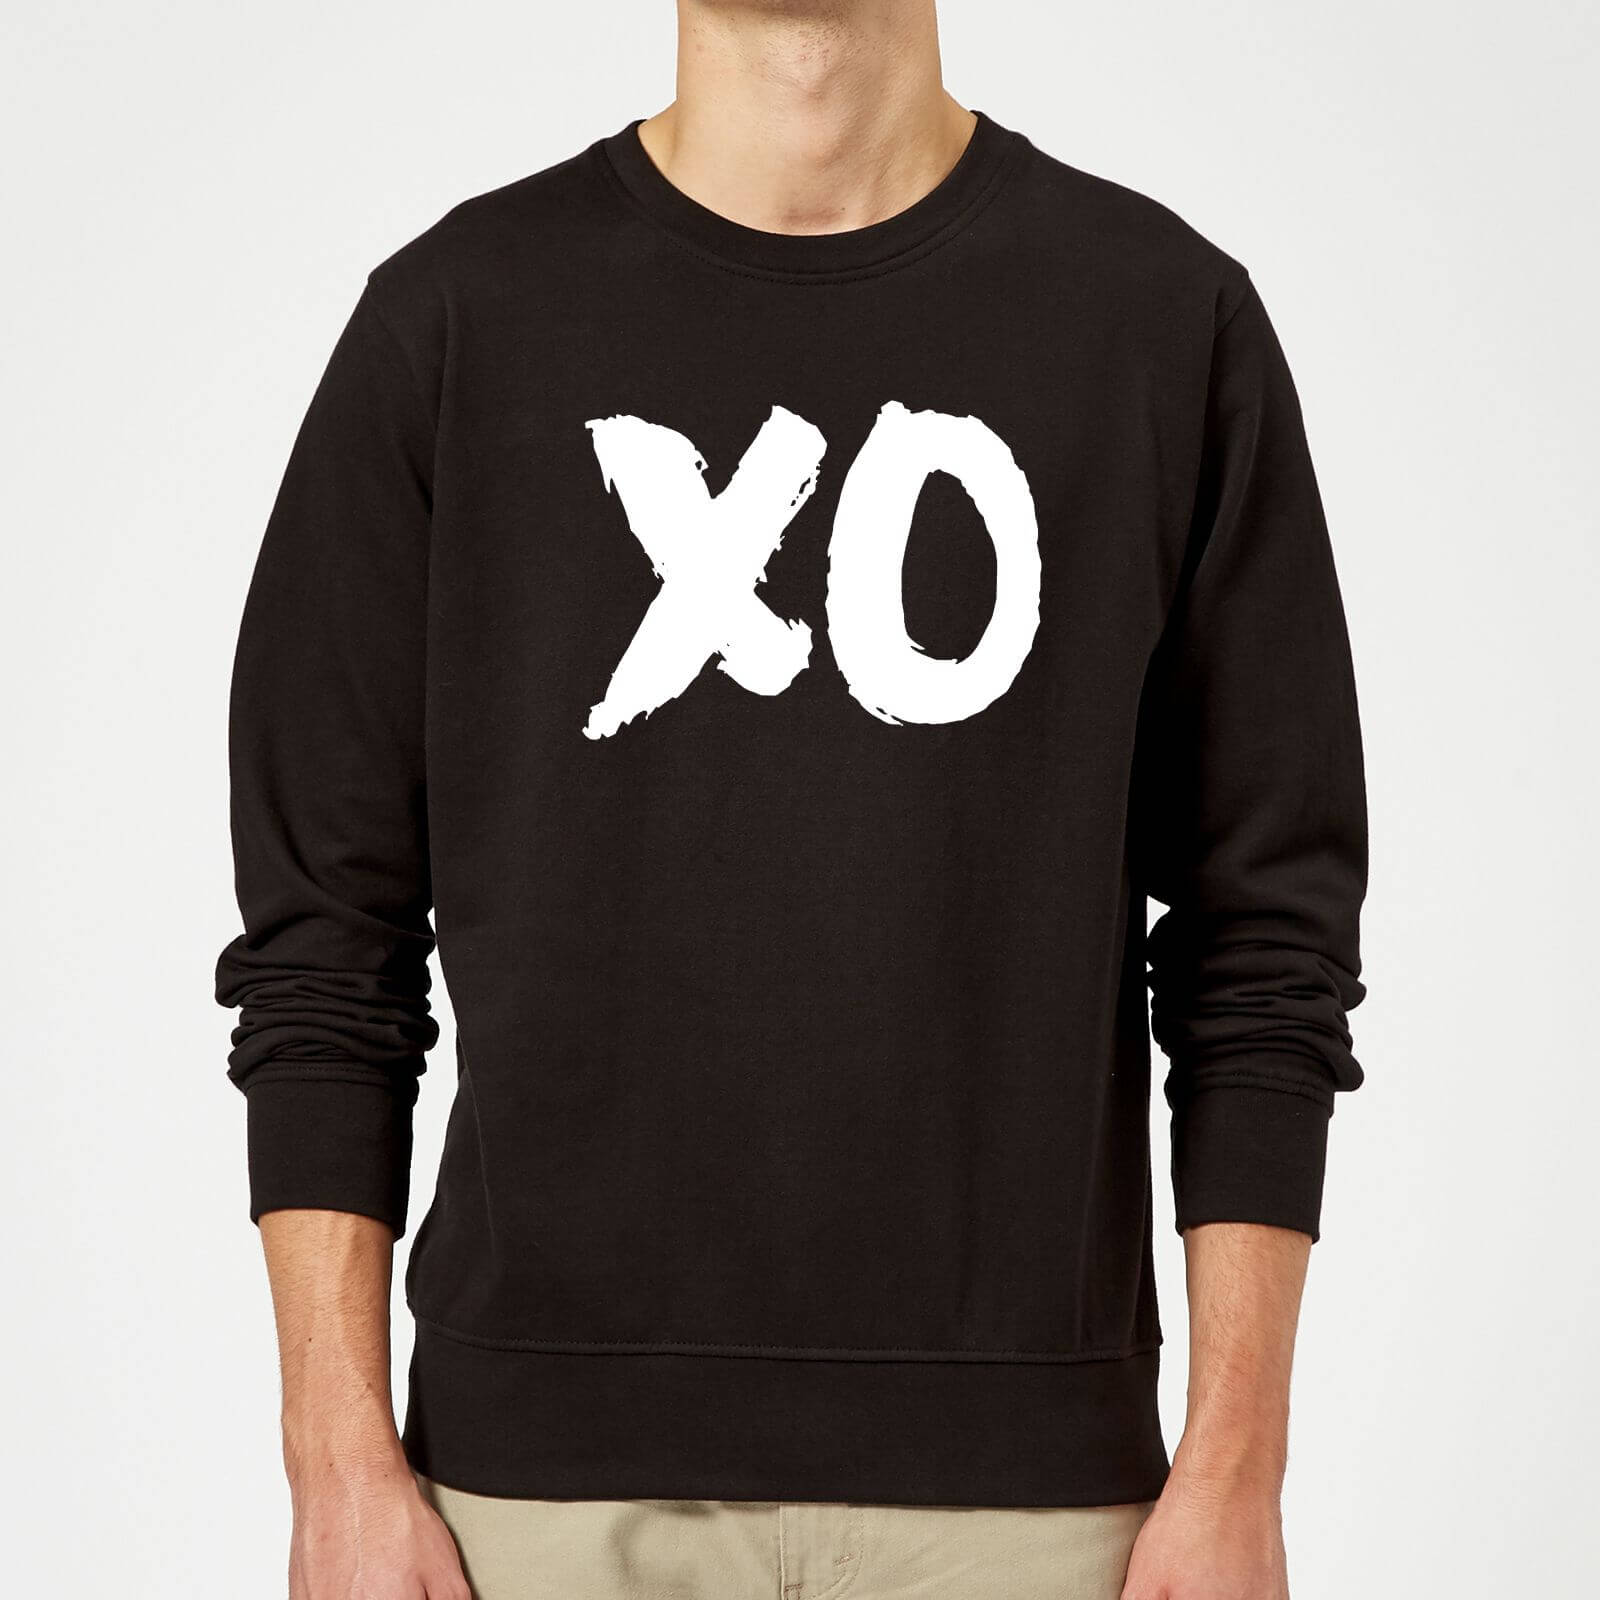 The Motivated Type XO Sweatshirt - Black - S - Black